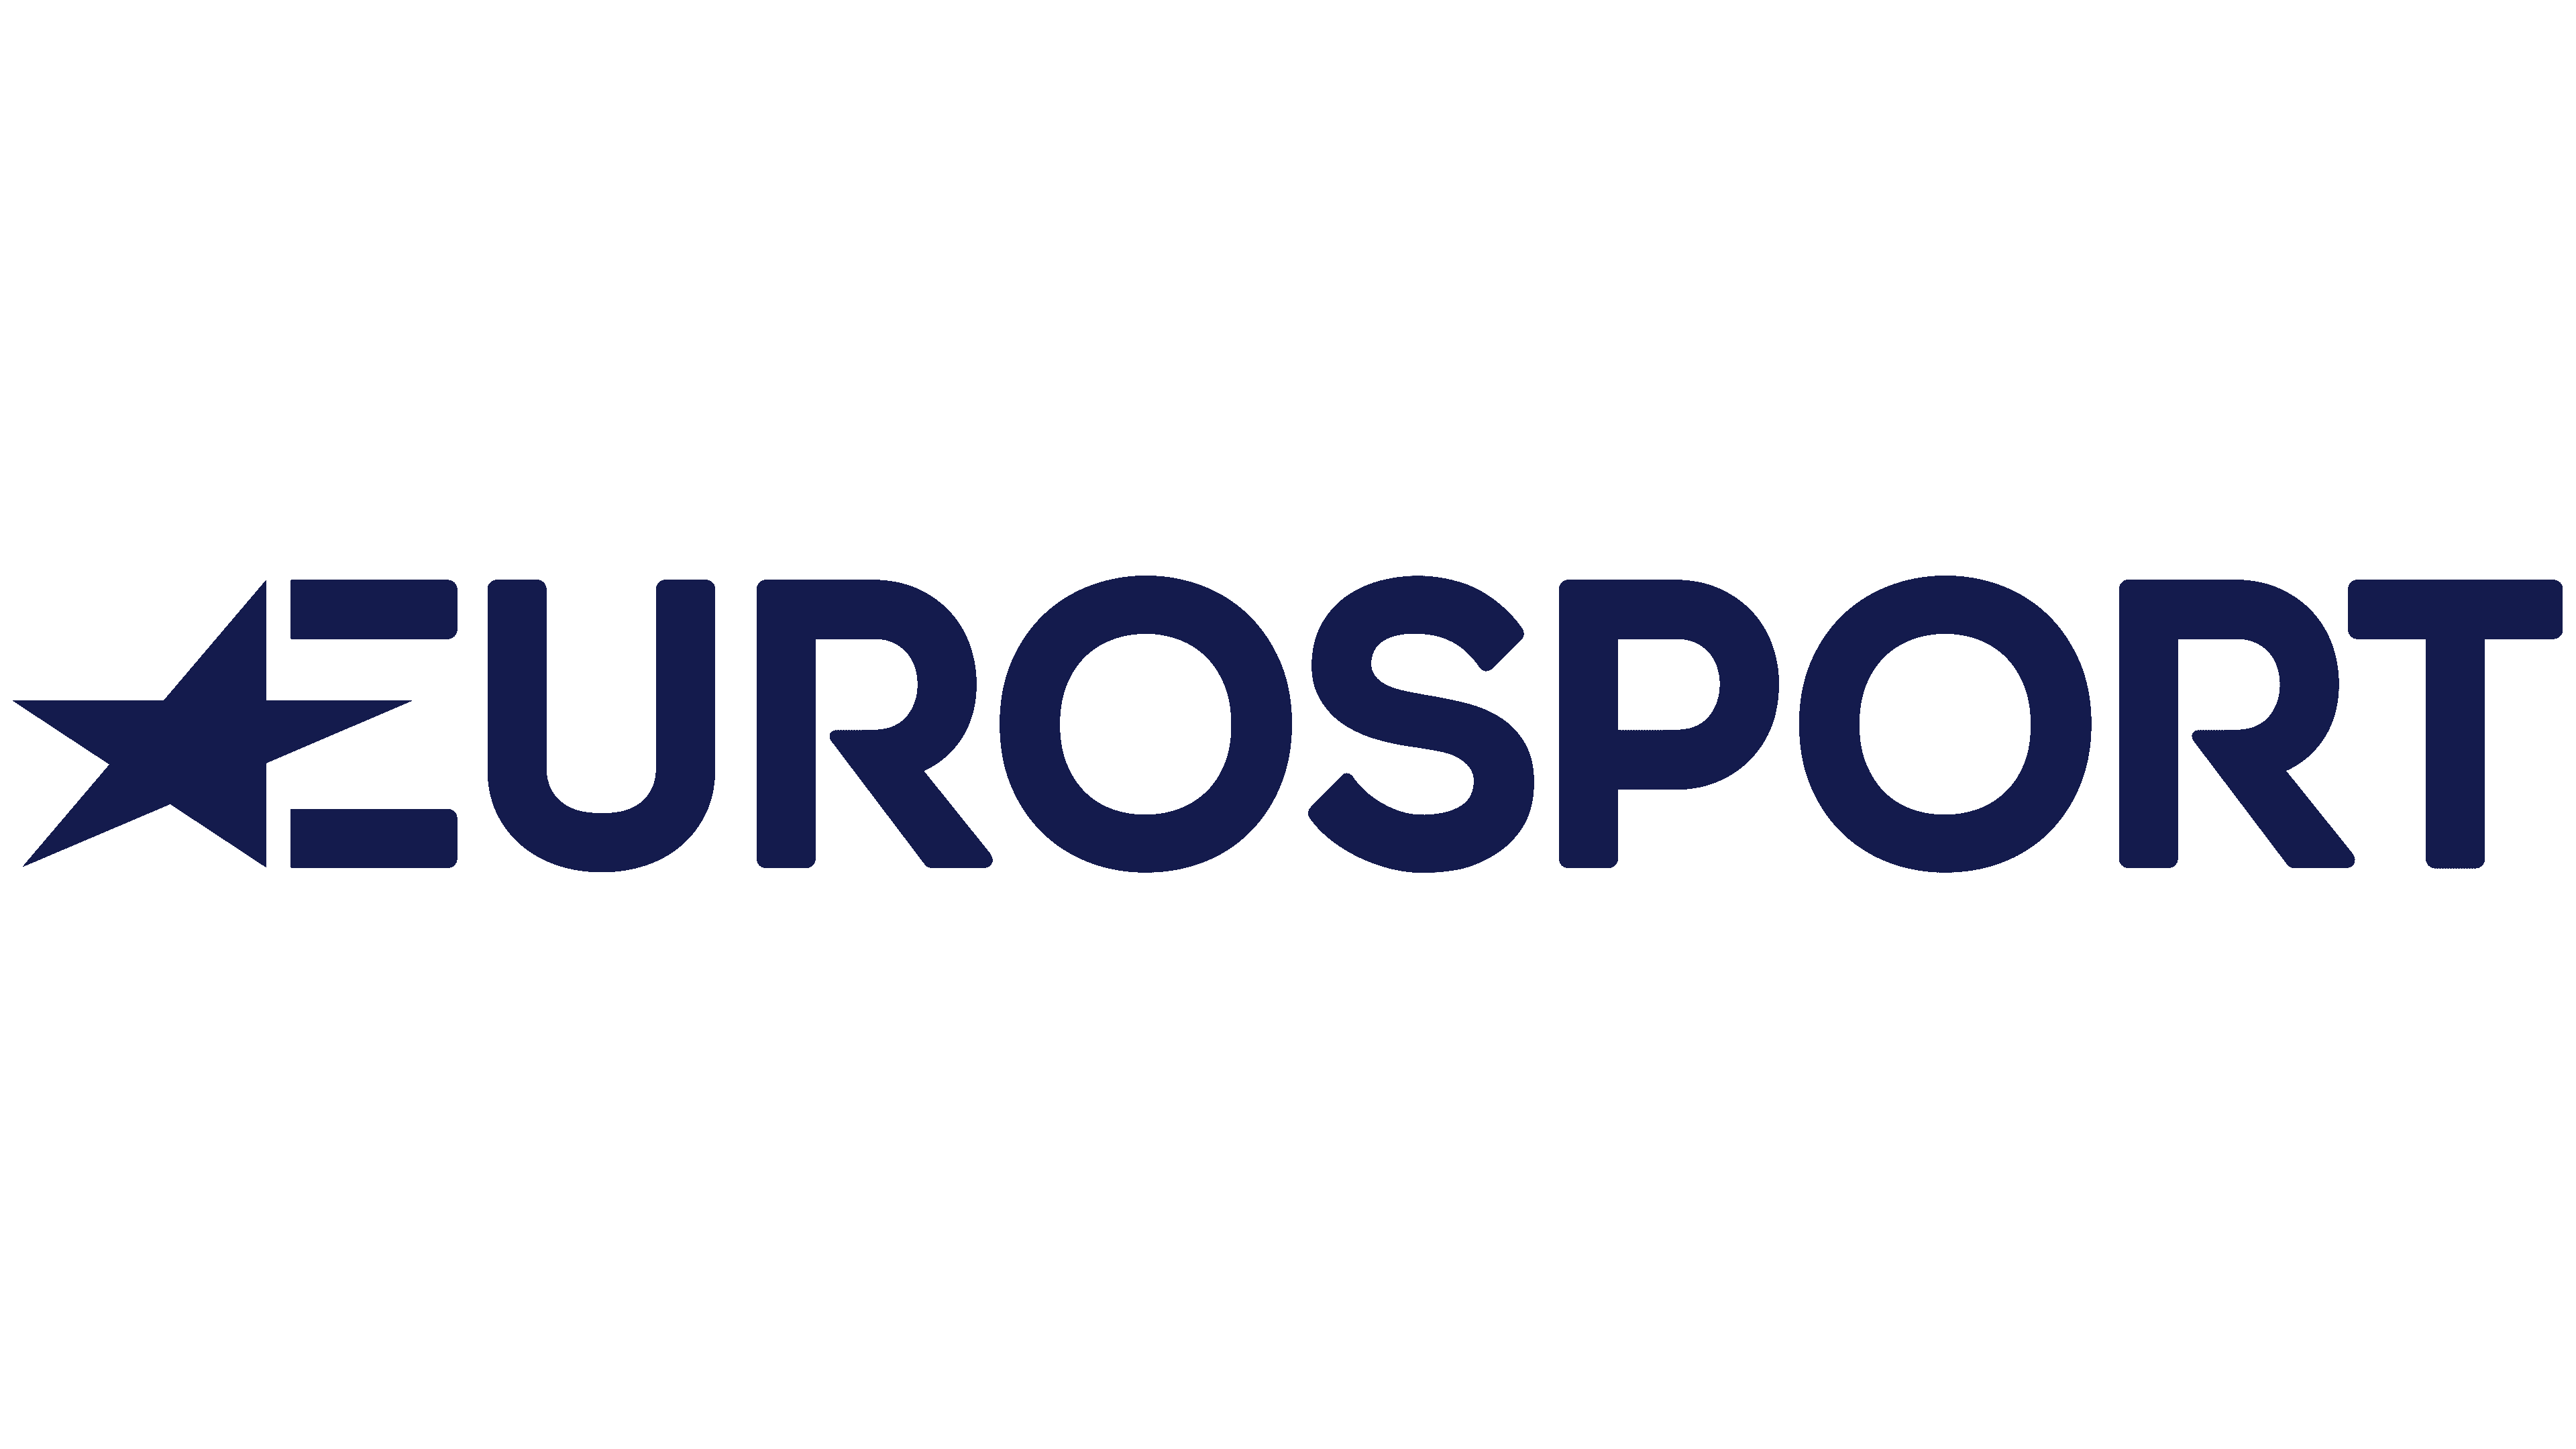 argent Programme venin eurosport logo png venin capacité Indica